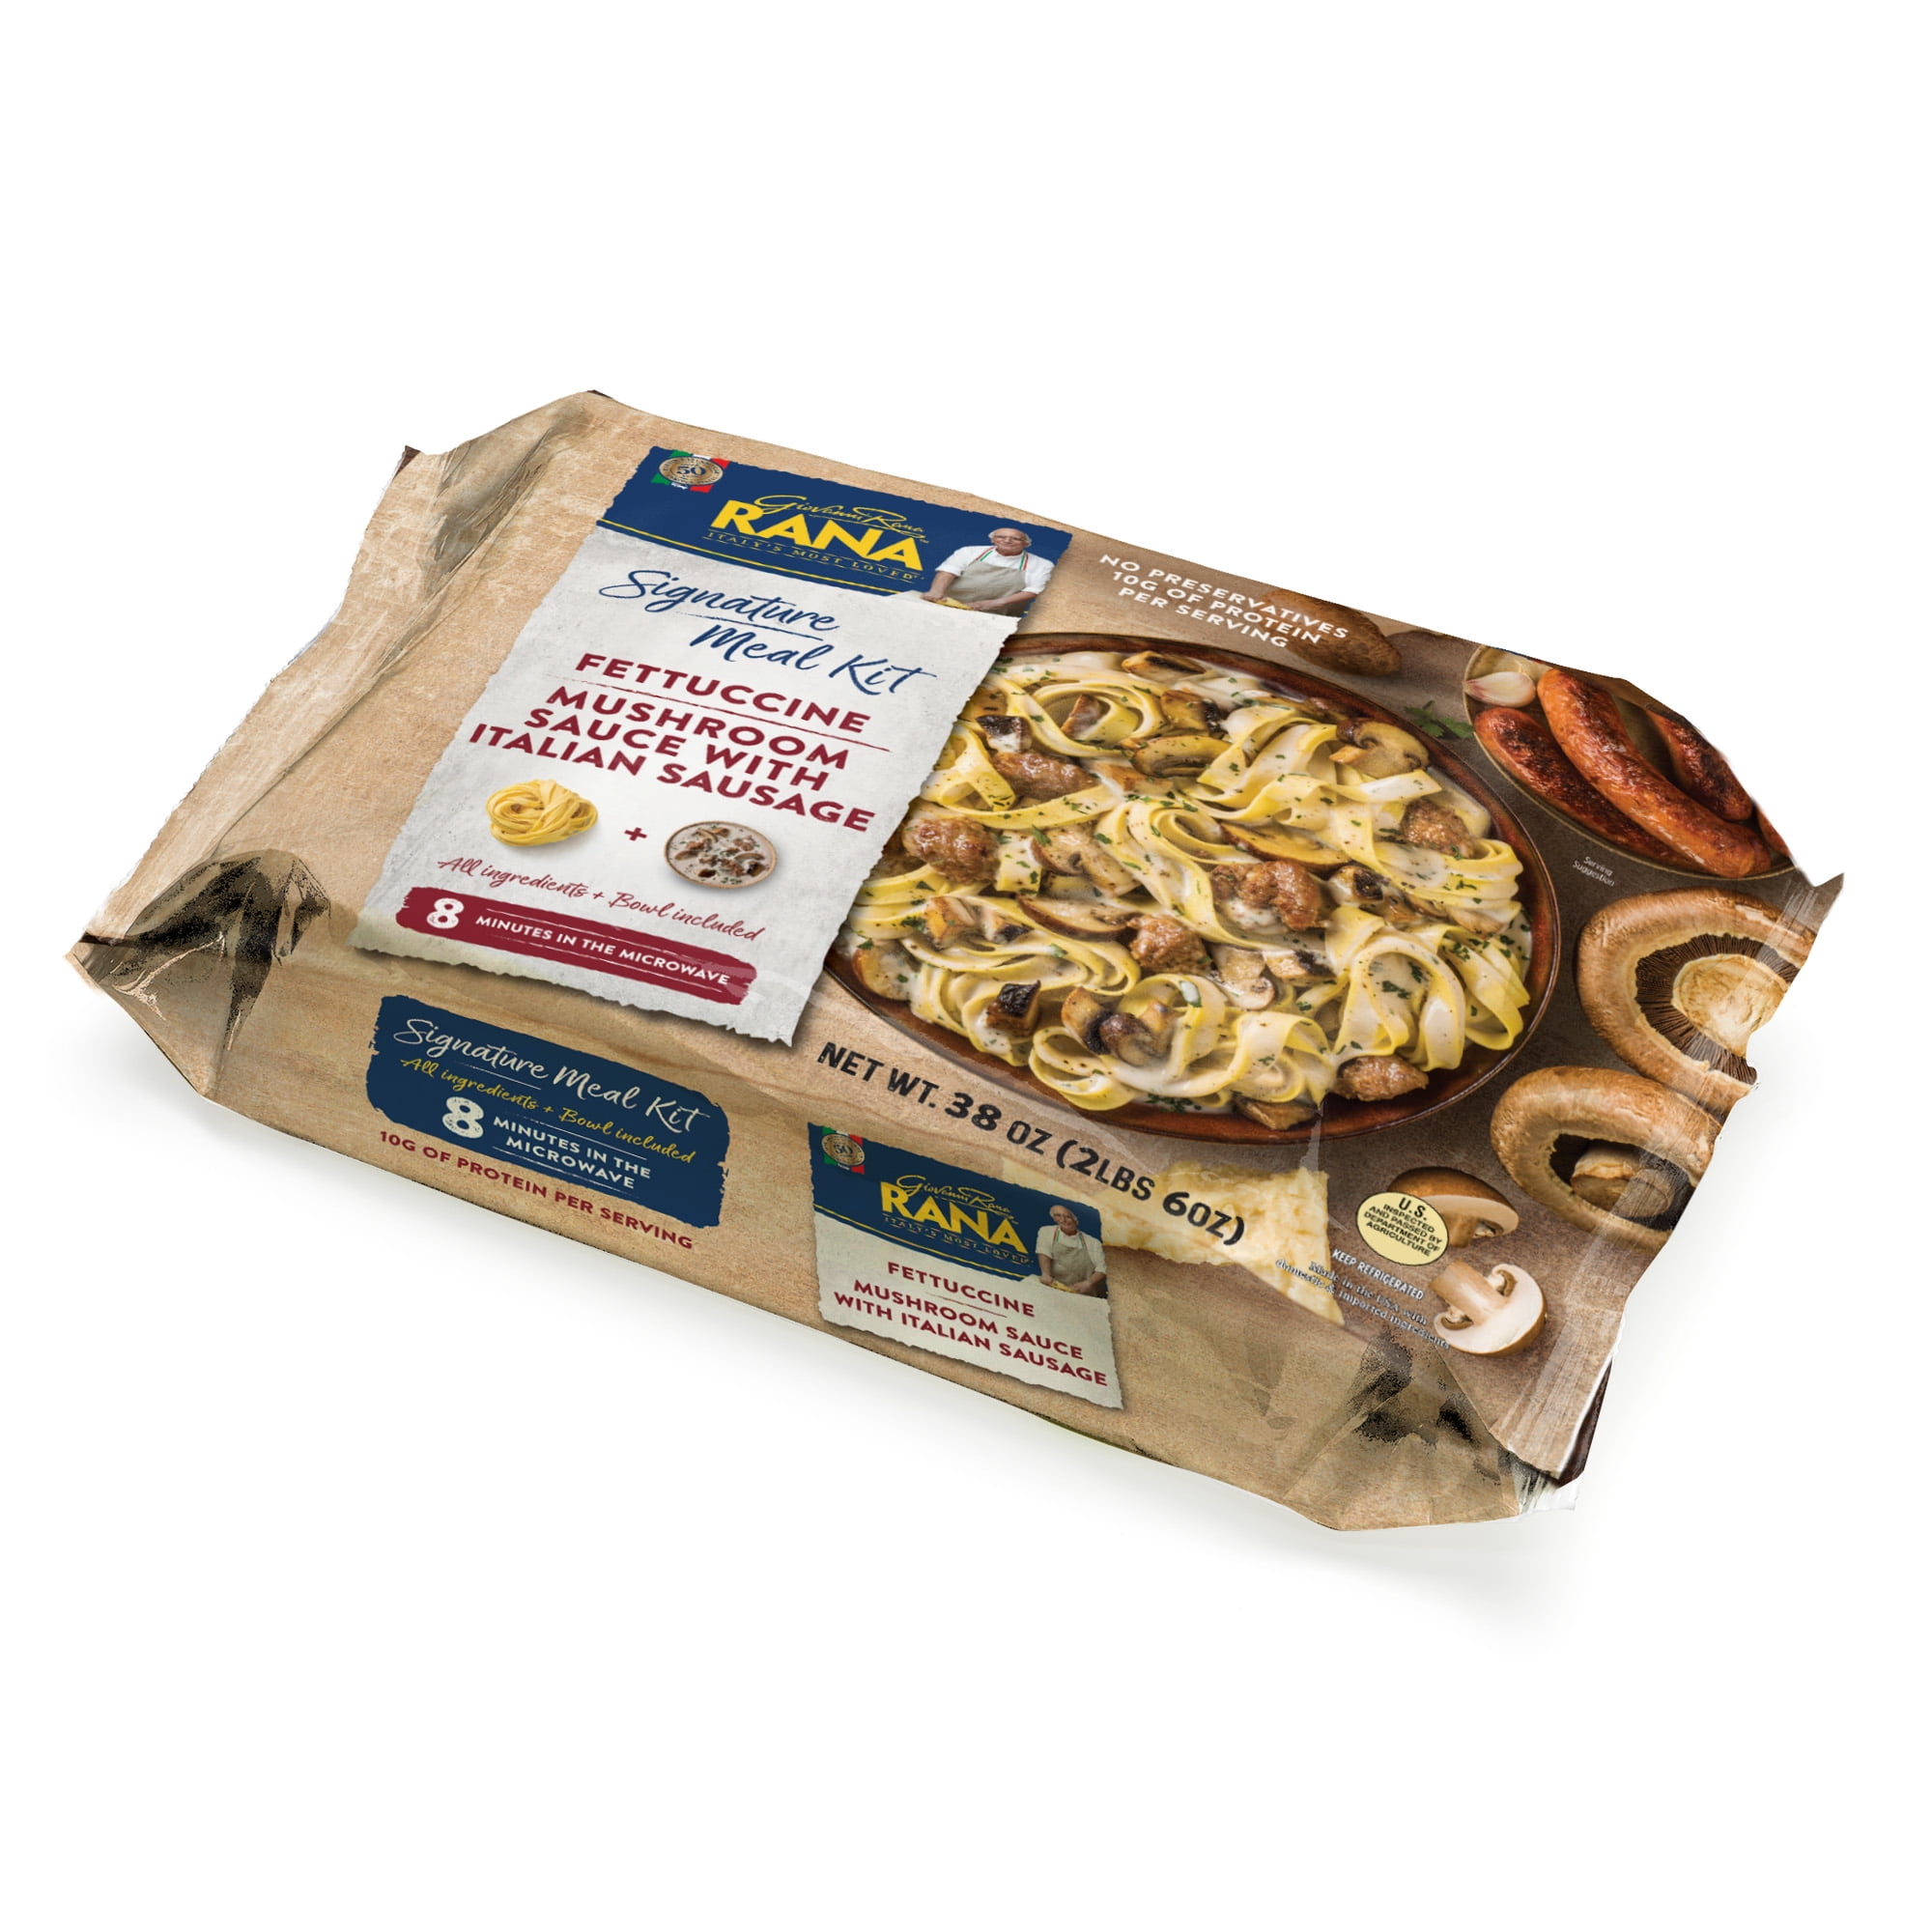 Giovanni Rana Tray Mushroom Kit 38oz) Sausage Meal & (Family Homestyle Fettuccine Premium Size